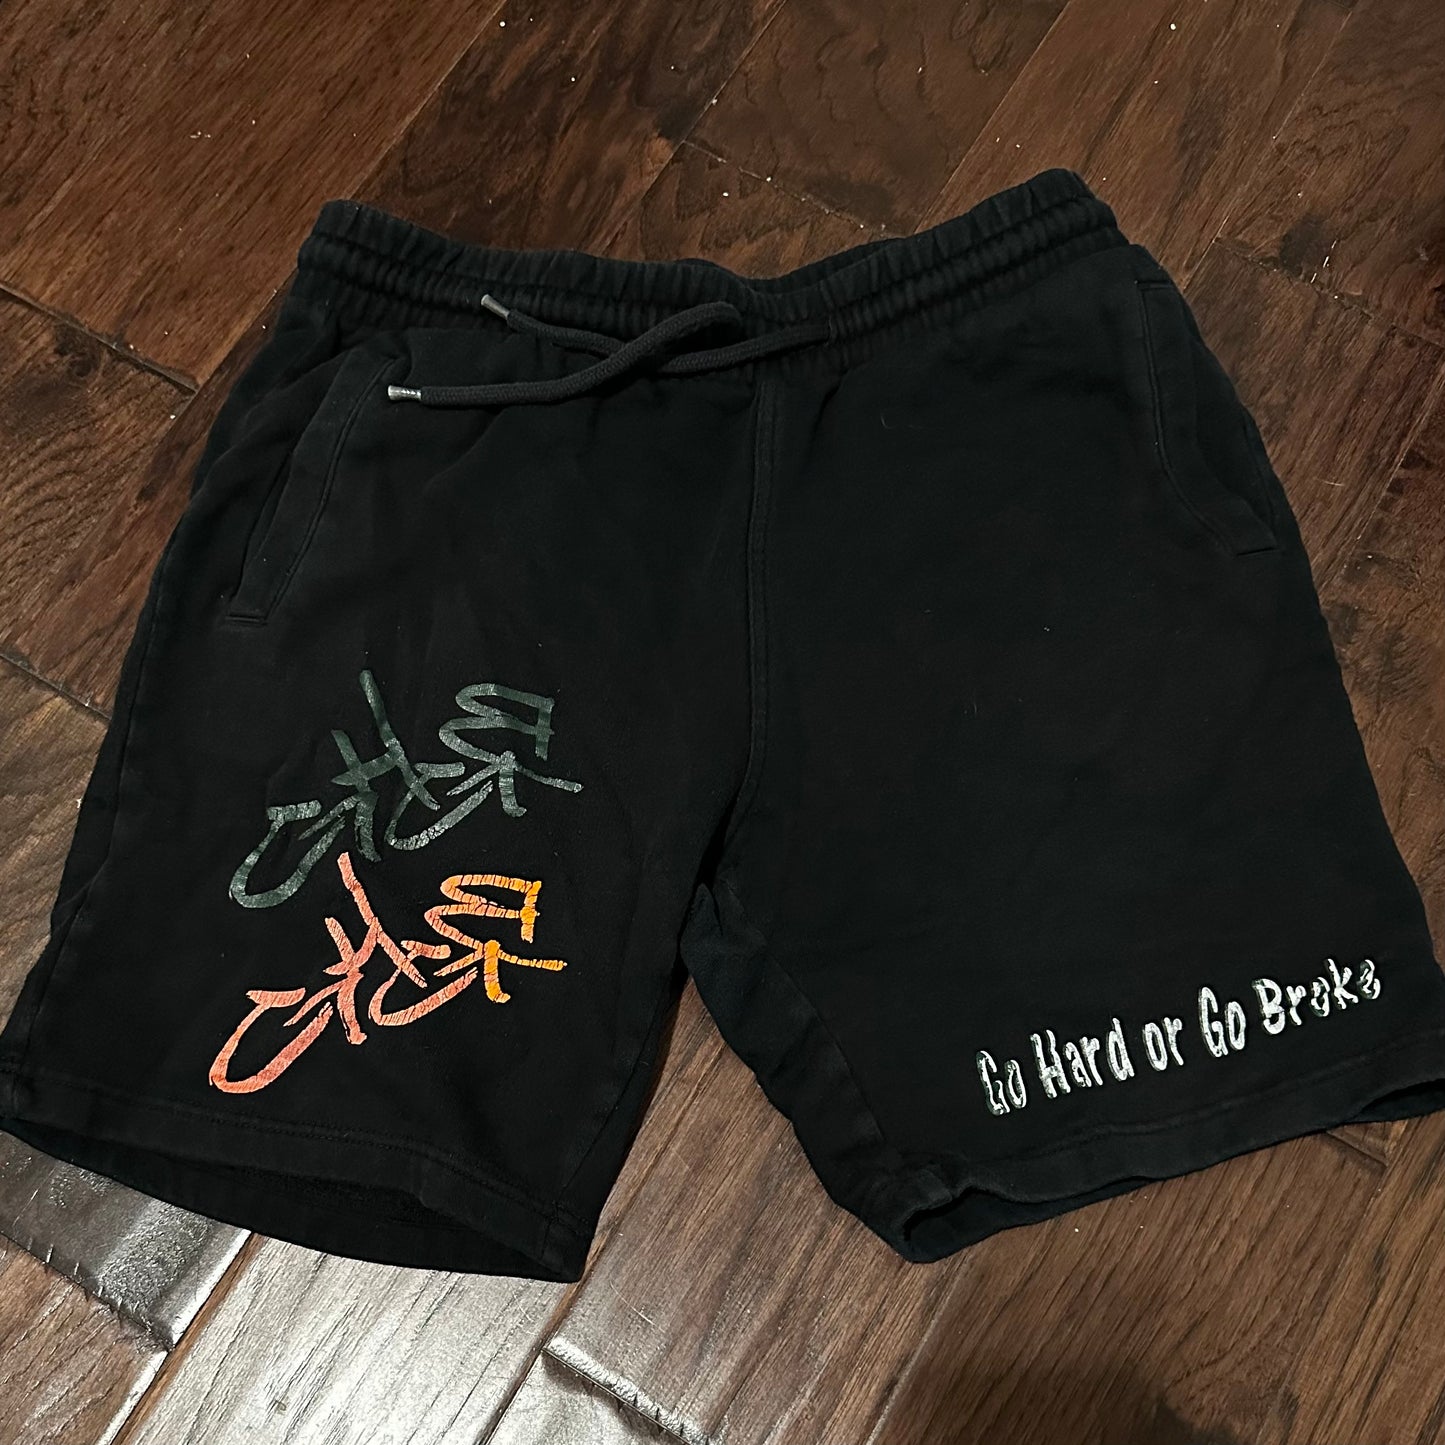 Go hard or go broke Black Shorts - Medium